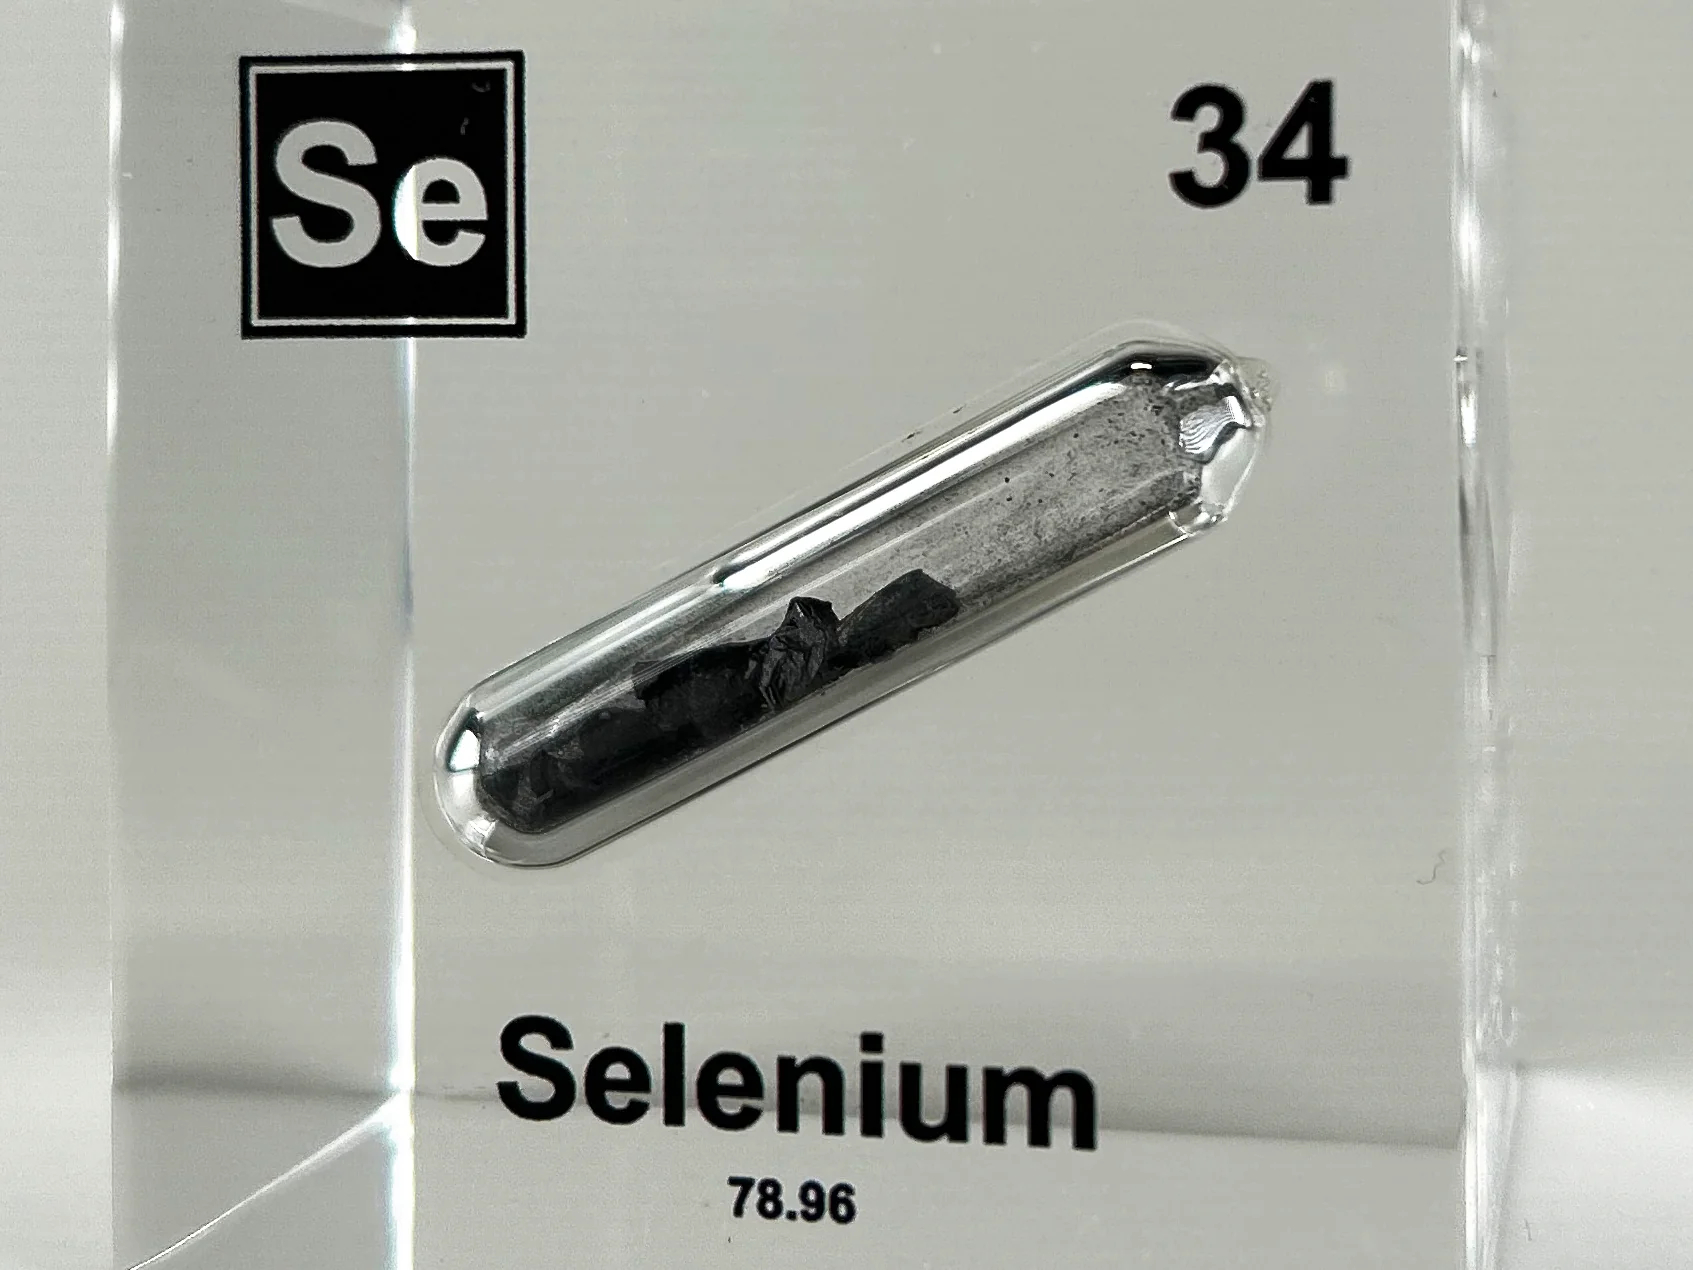 Example of selenium